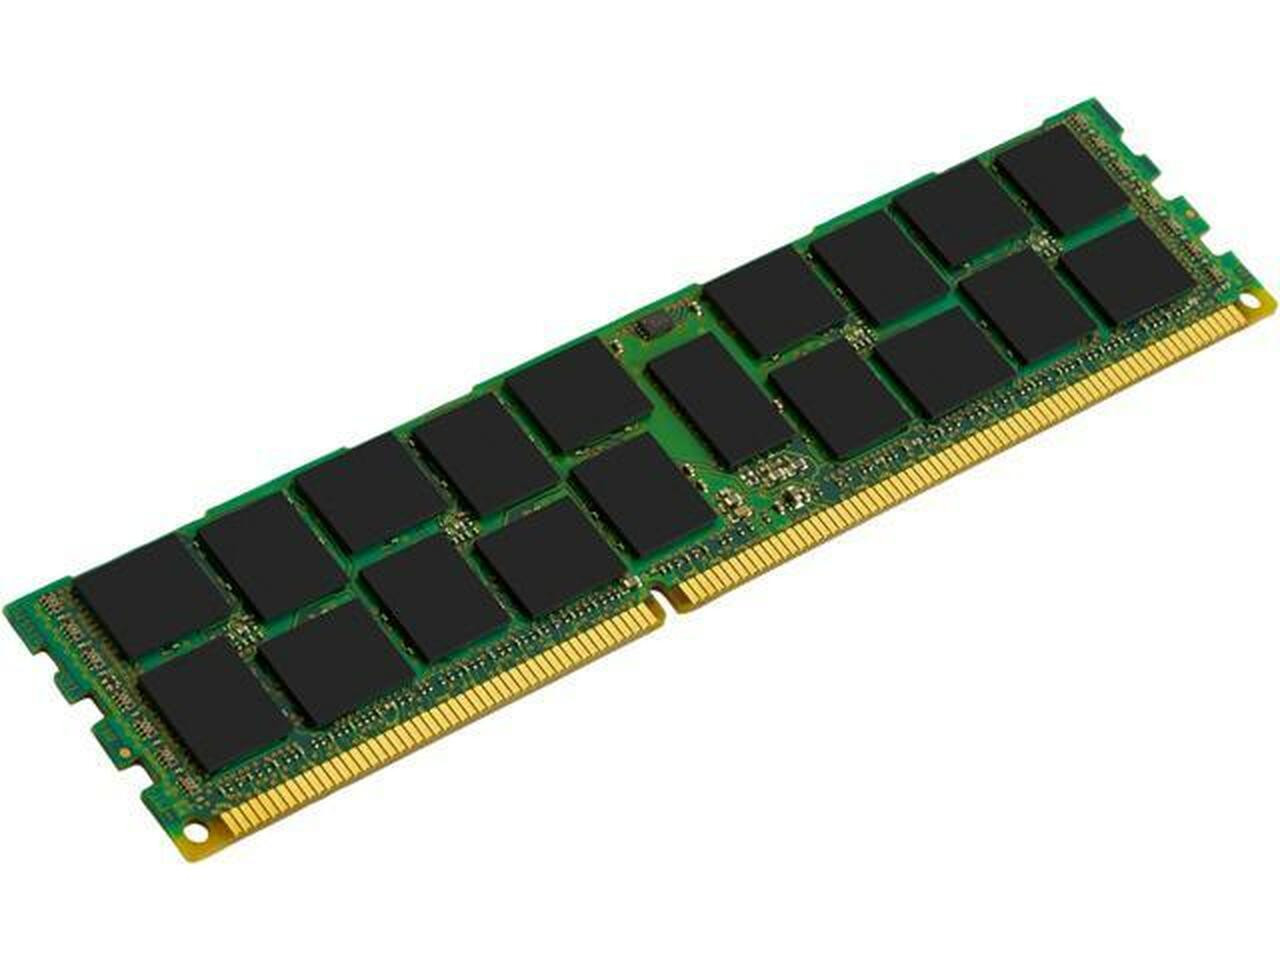 Netpatibles 8GB DDR3 SDRAM Memory Module - MEMDR380LSL02ER16NPM